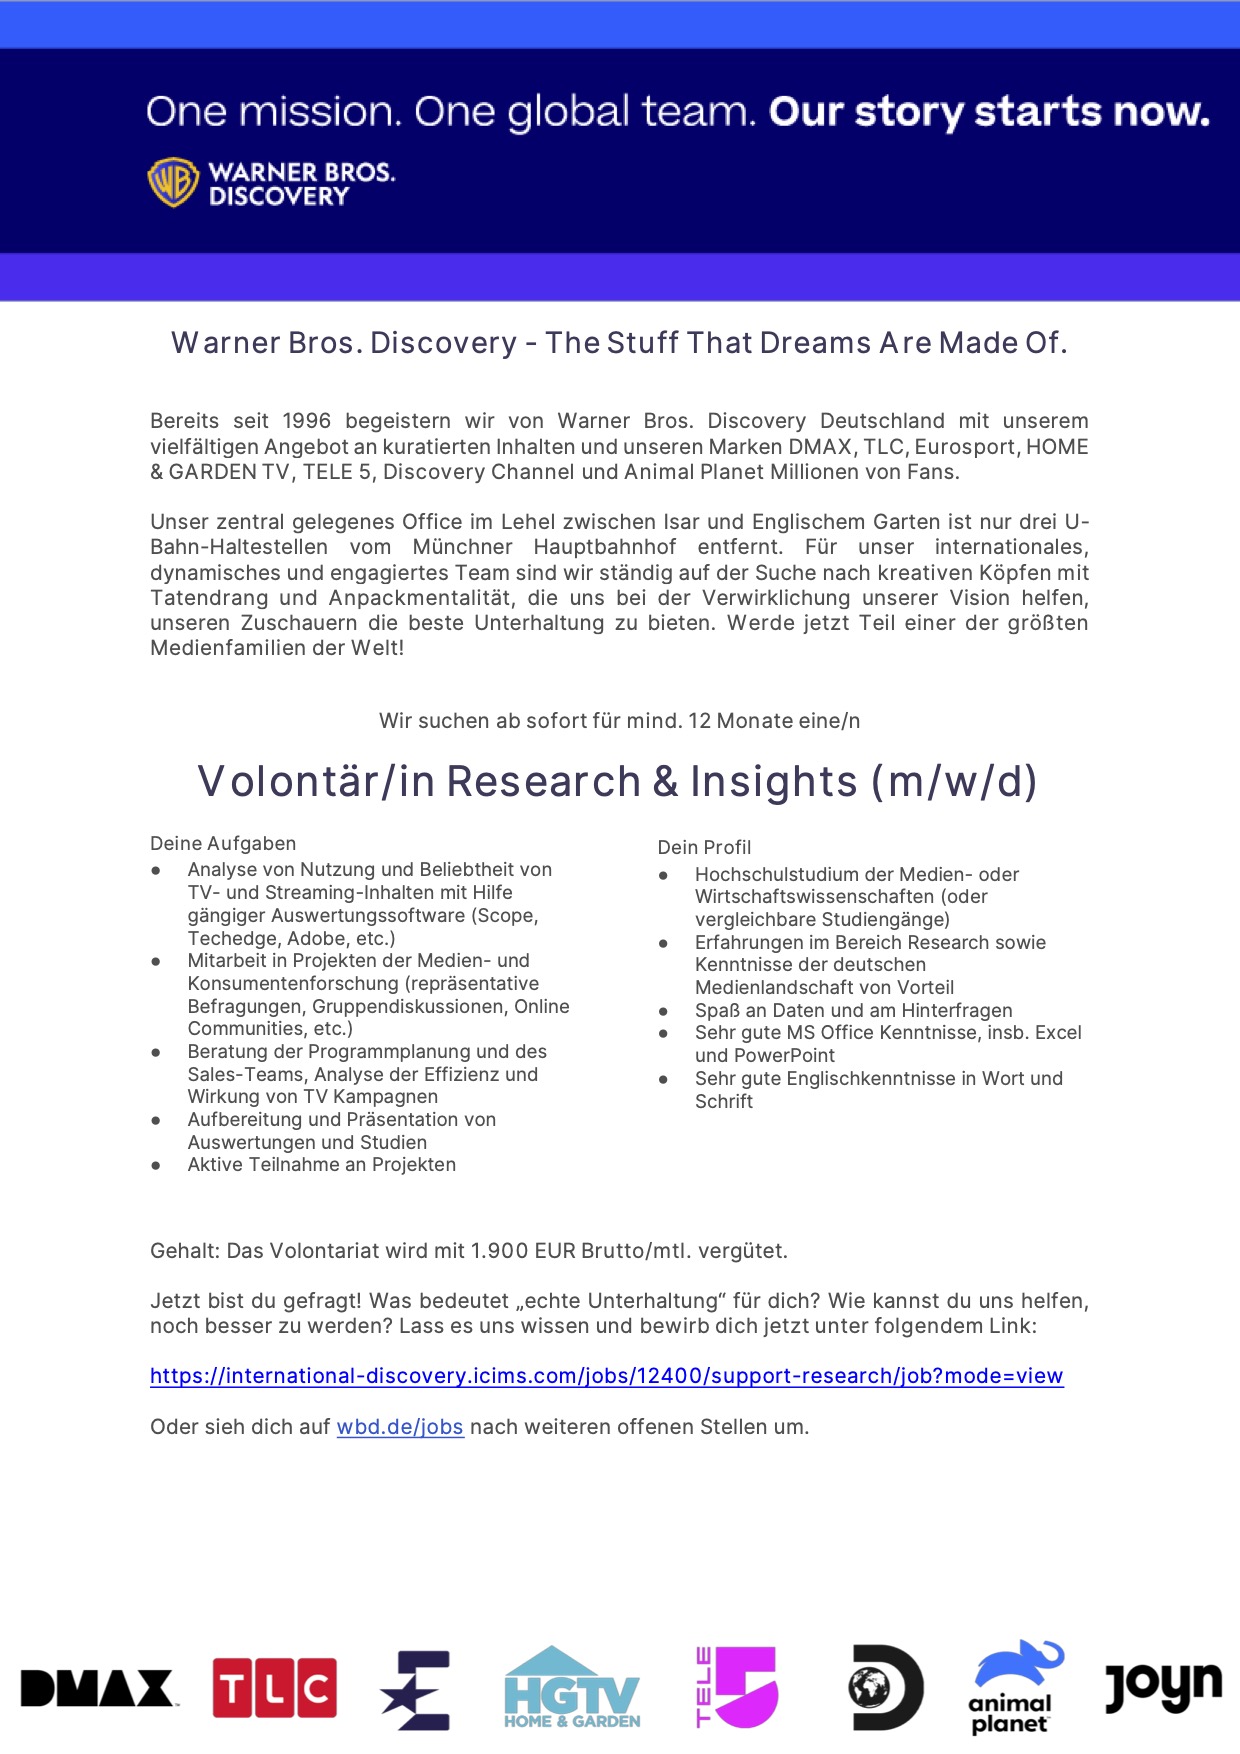 Volontär/in Research & Insights (m/w/d)